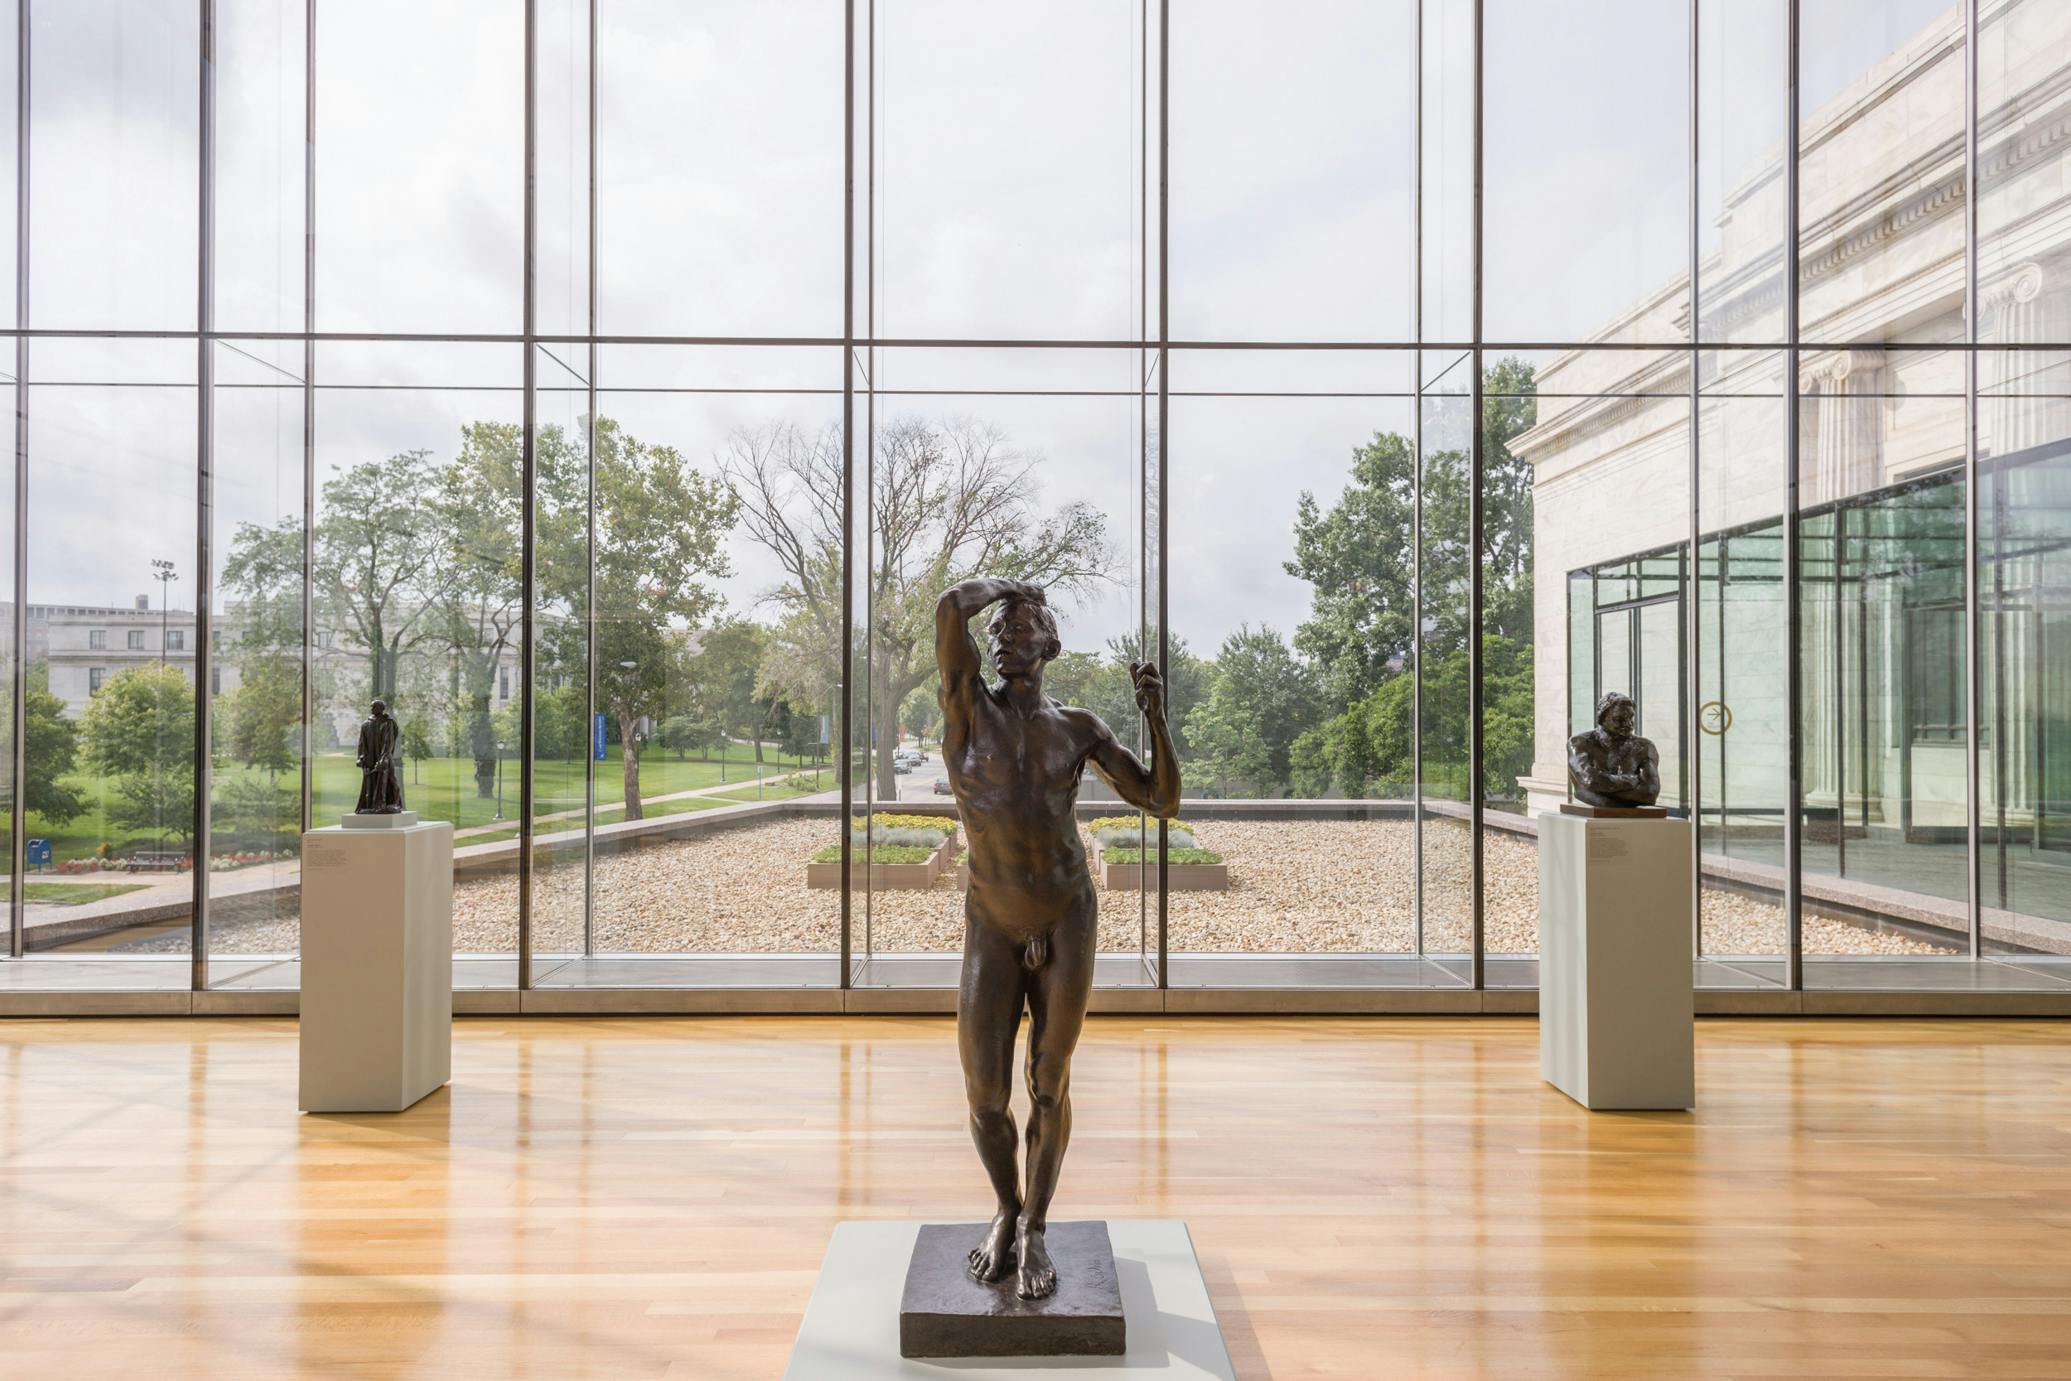 Rodin sculpture in the glass box gallery